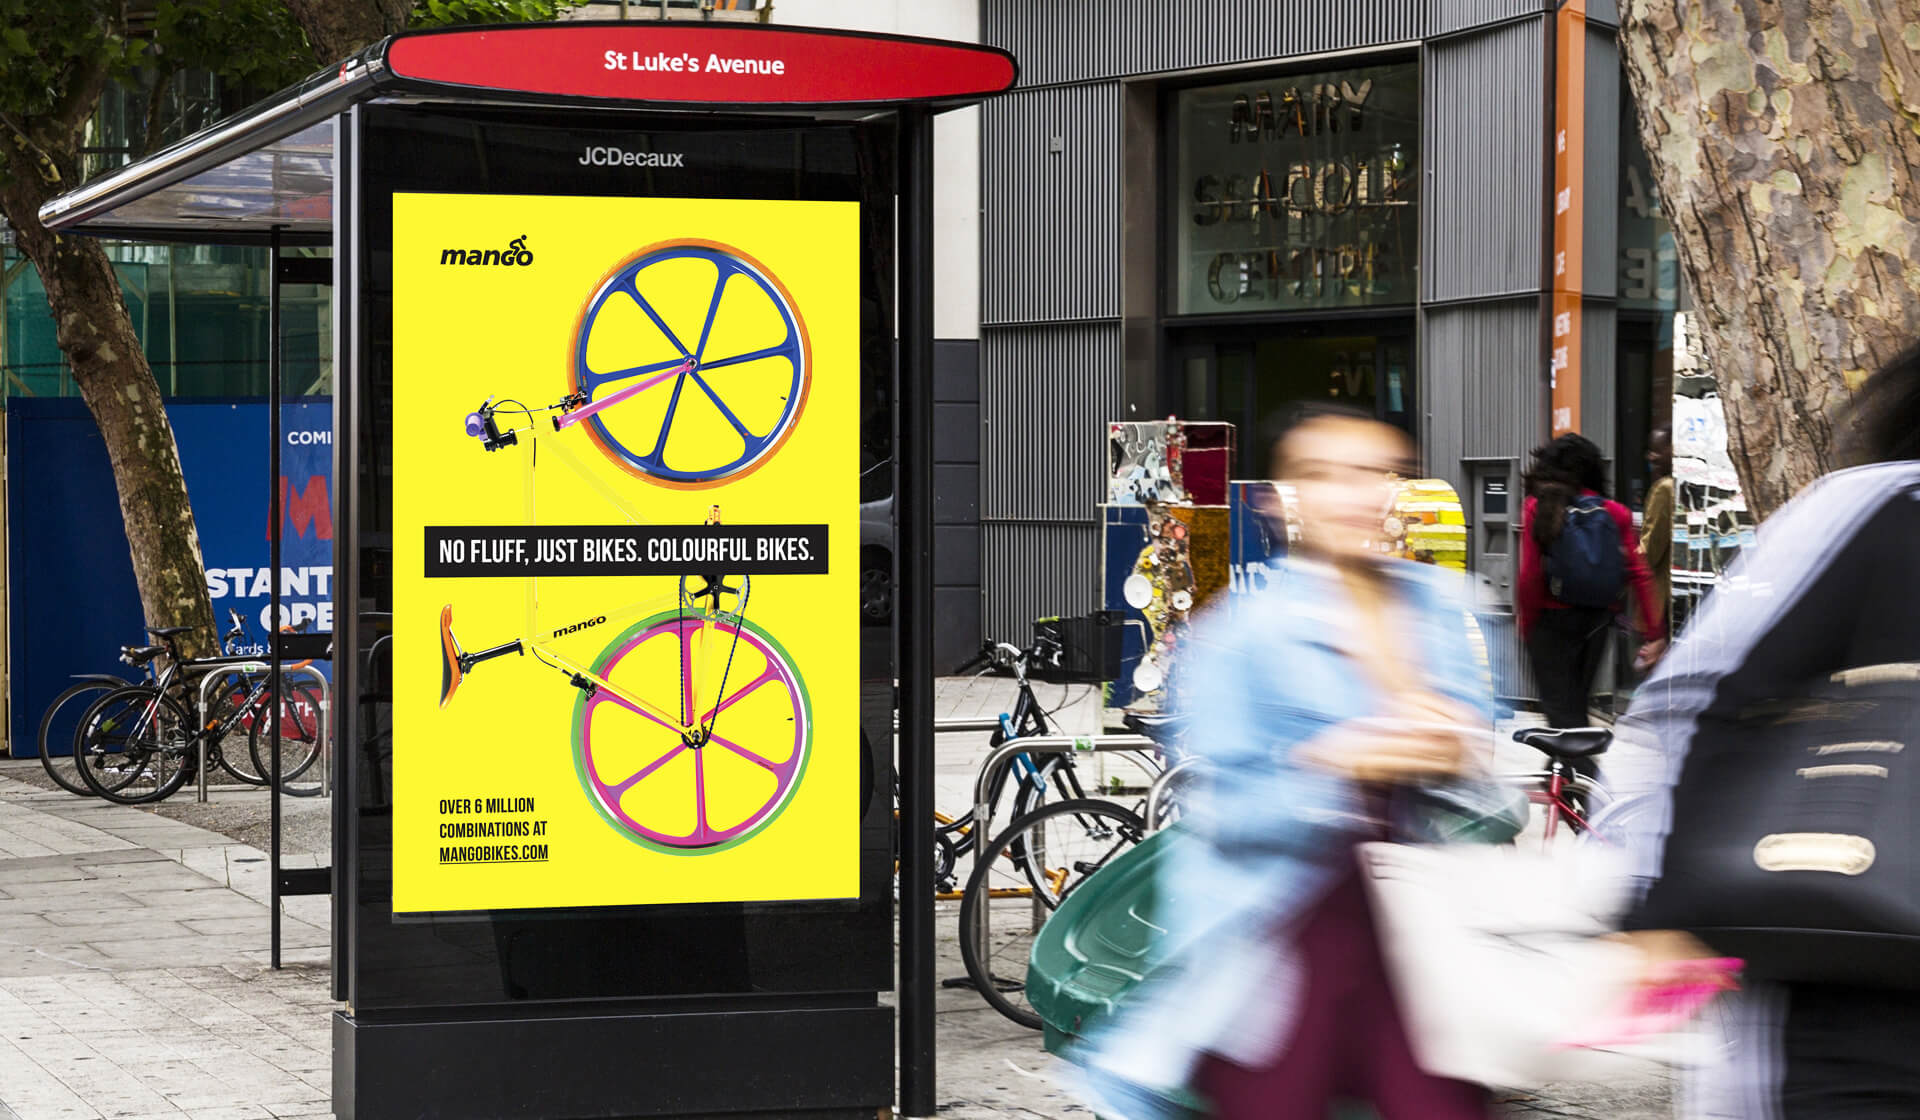 Mango Bikes - No Fluff - Mellor&Smith Advertising campaign at bus stop